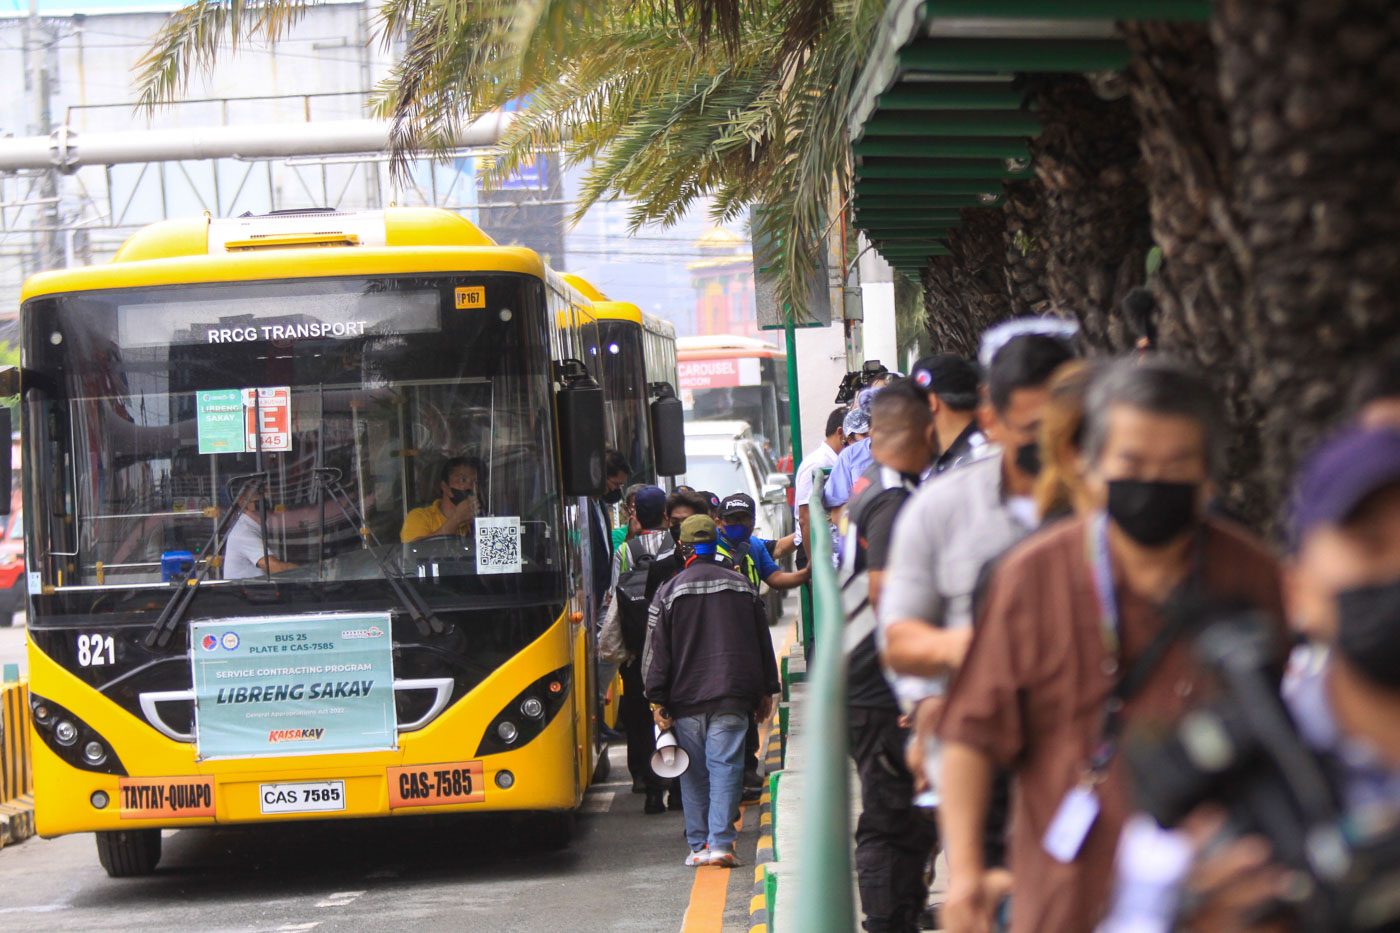 Libreng Sakay nears end; DOTr to privatize EDSA bus carousel in 2023